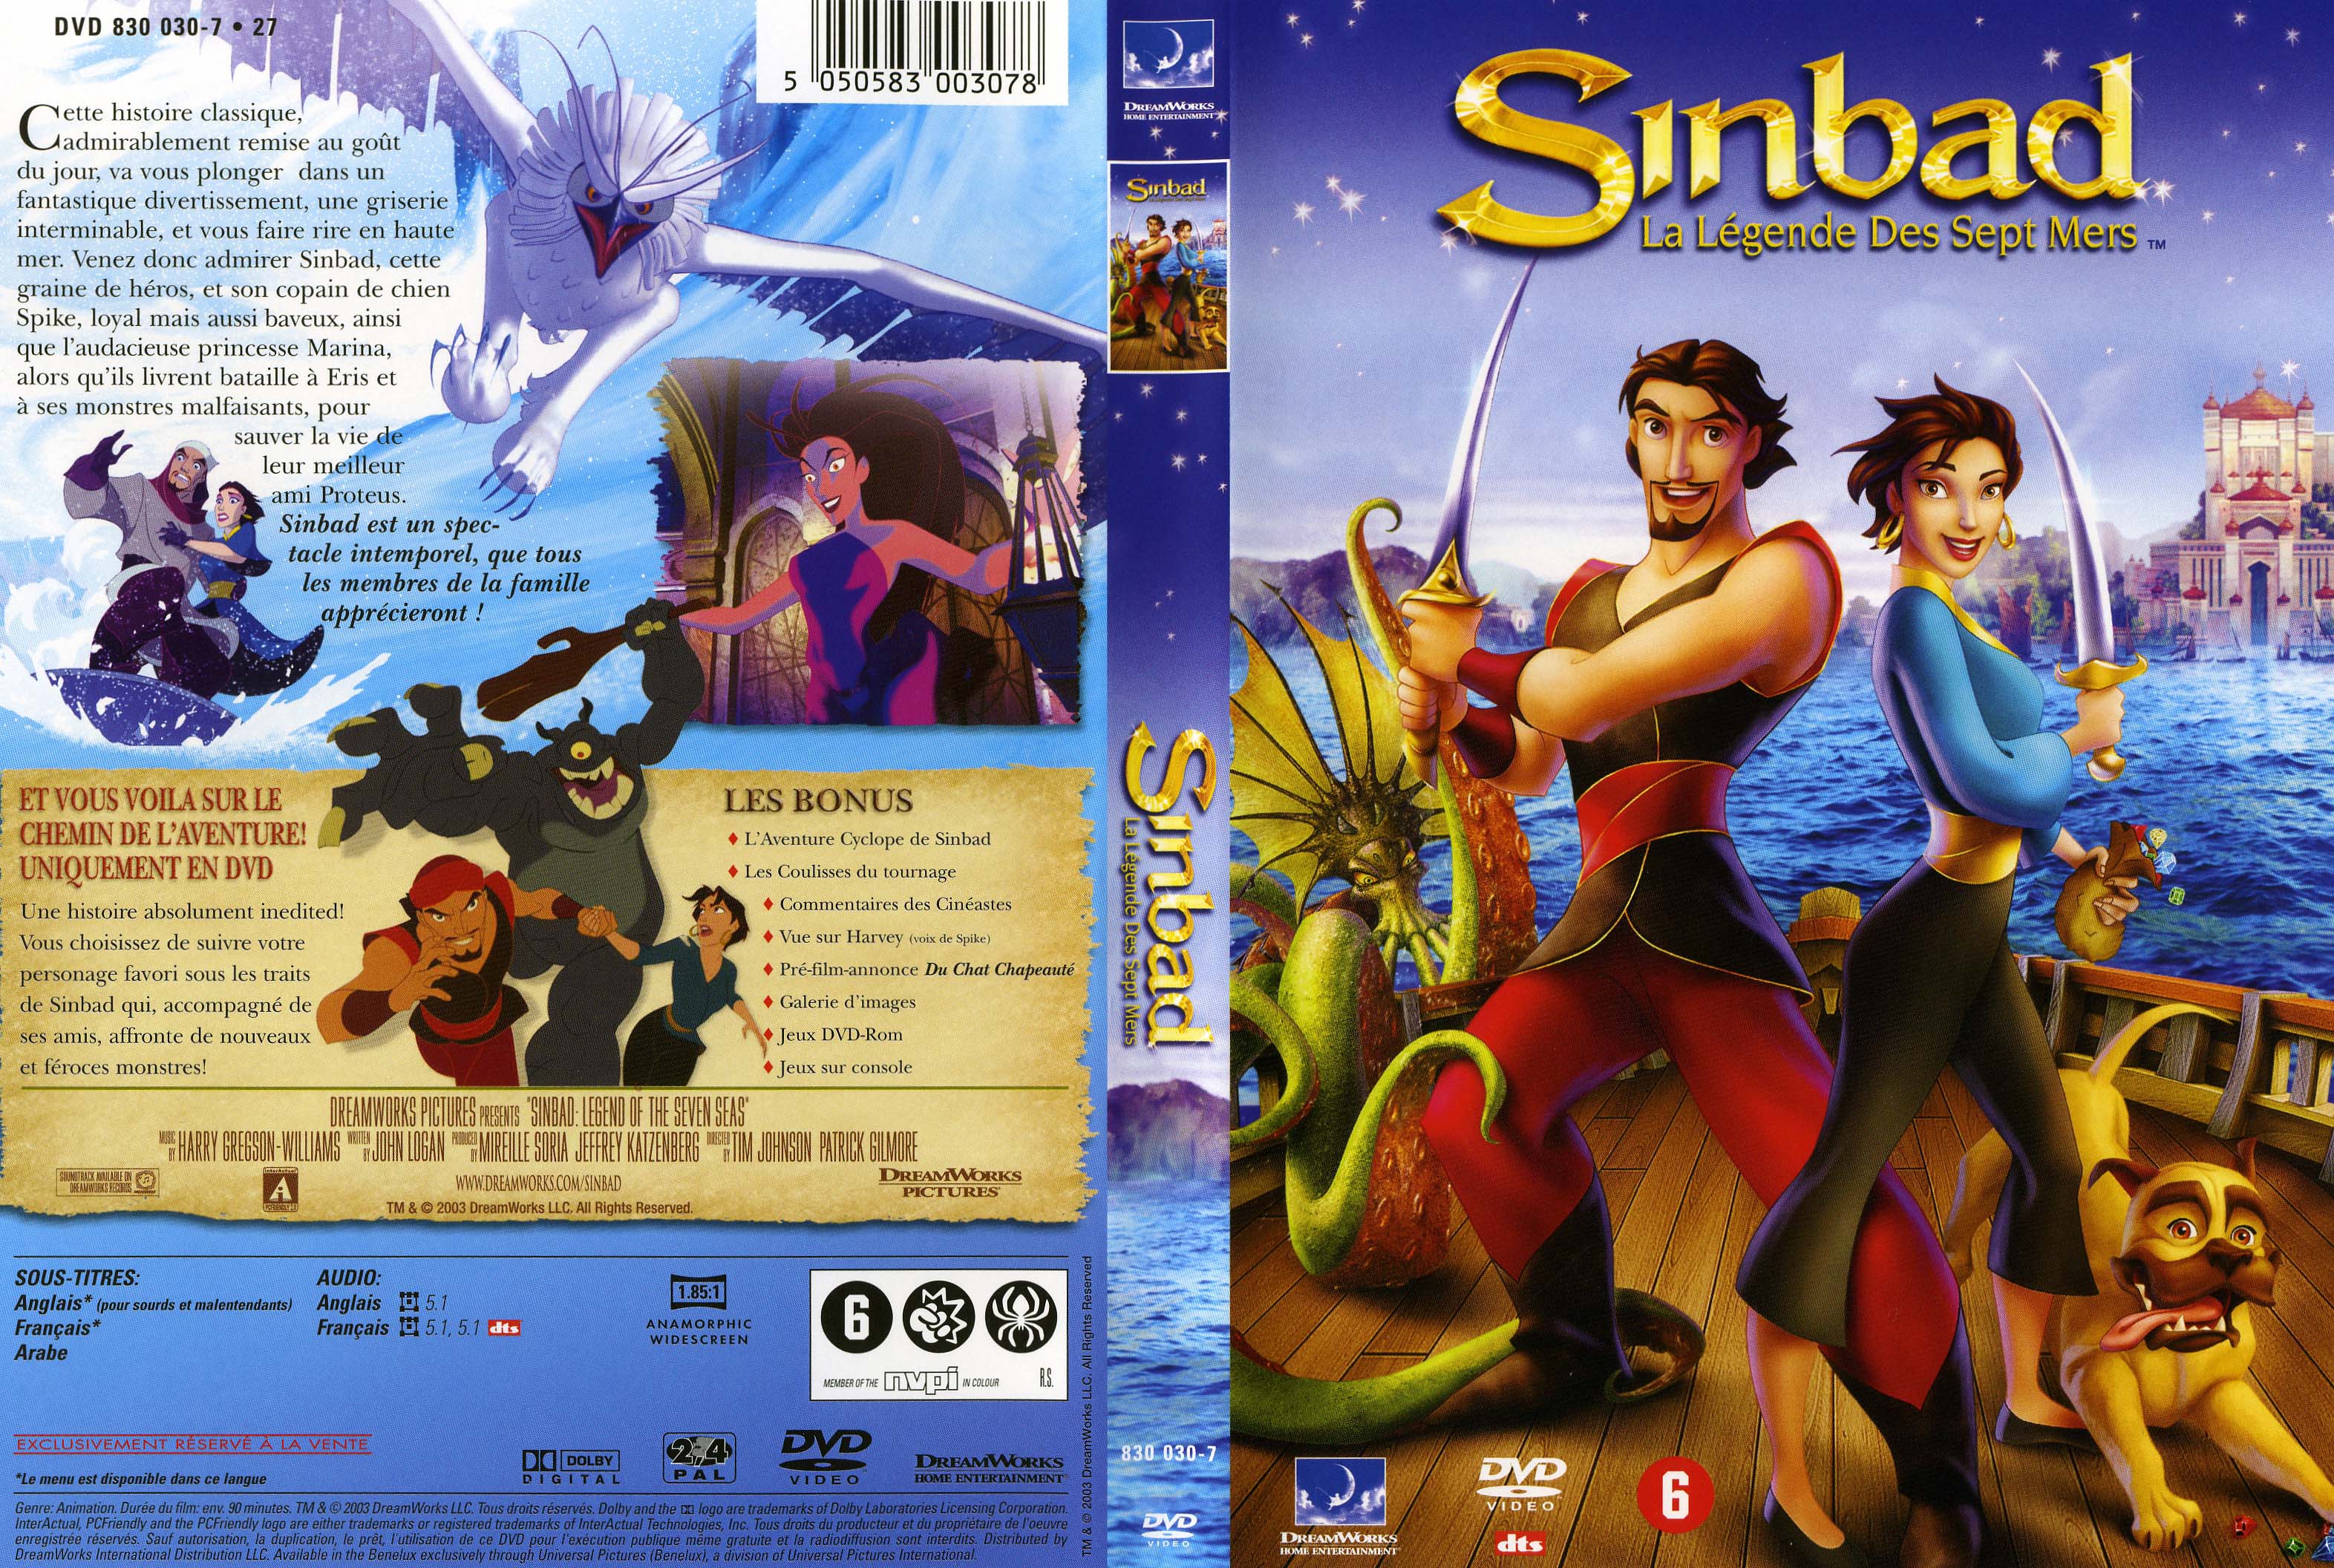 Jaquette DVD Sinbad la lgende des 7 mers